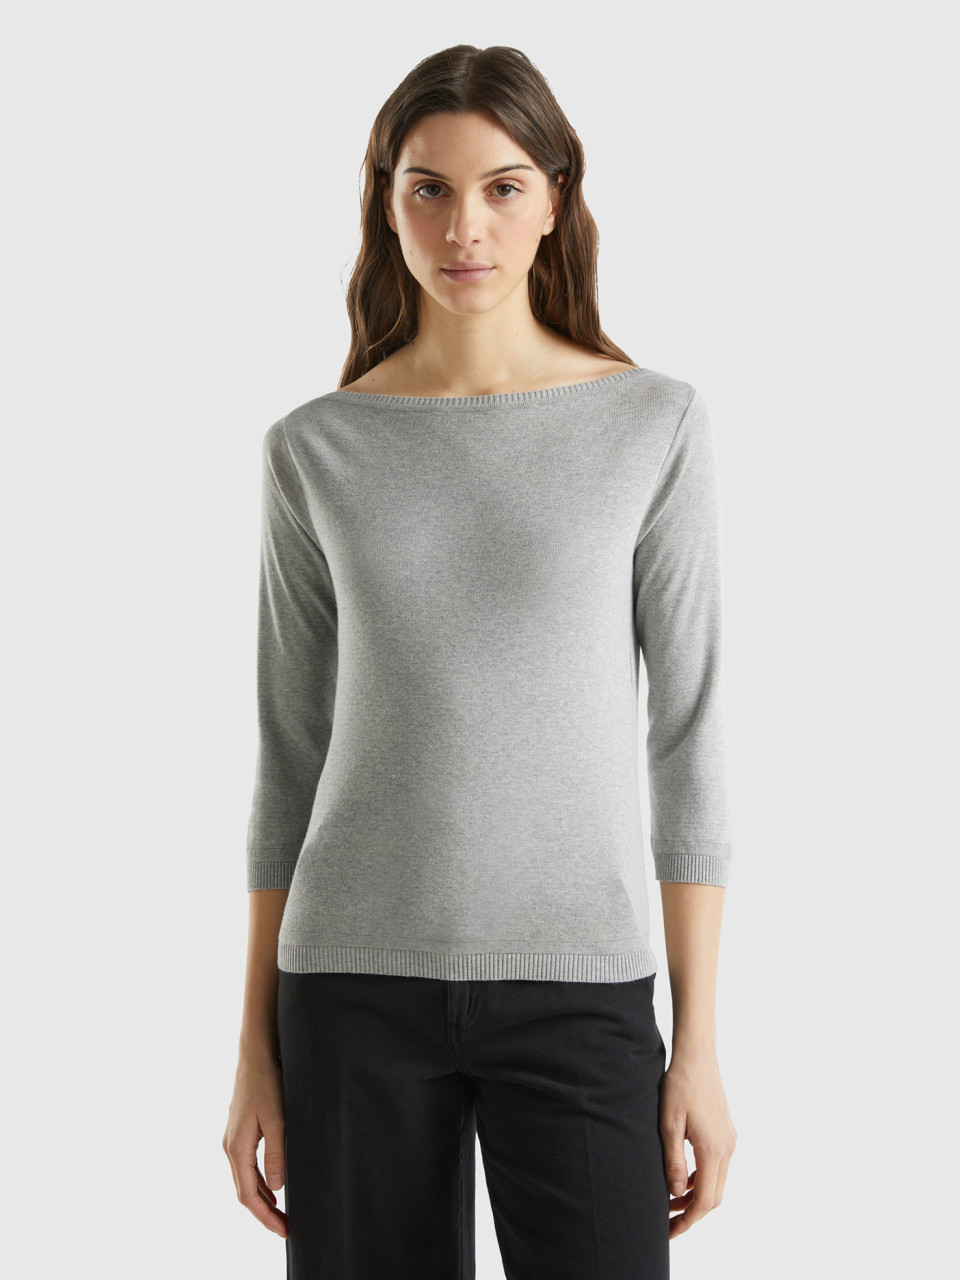 Benetton Online exclusive, 100% Cotton Boat Neck Sweater, Light Gray, Women